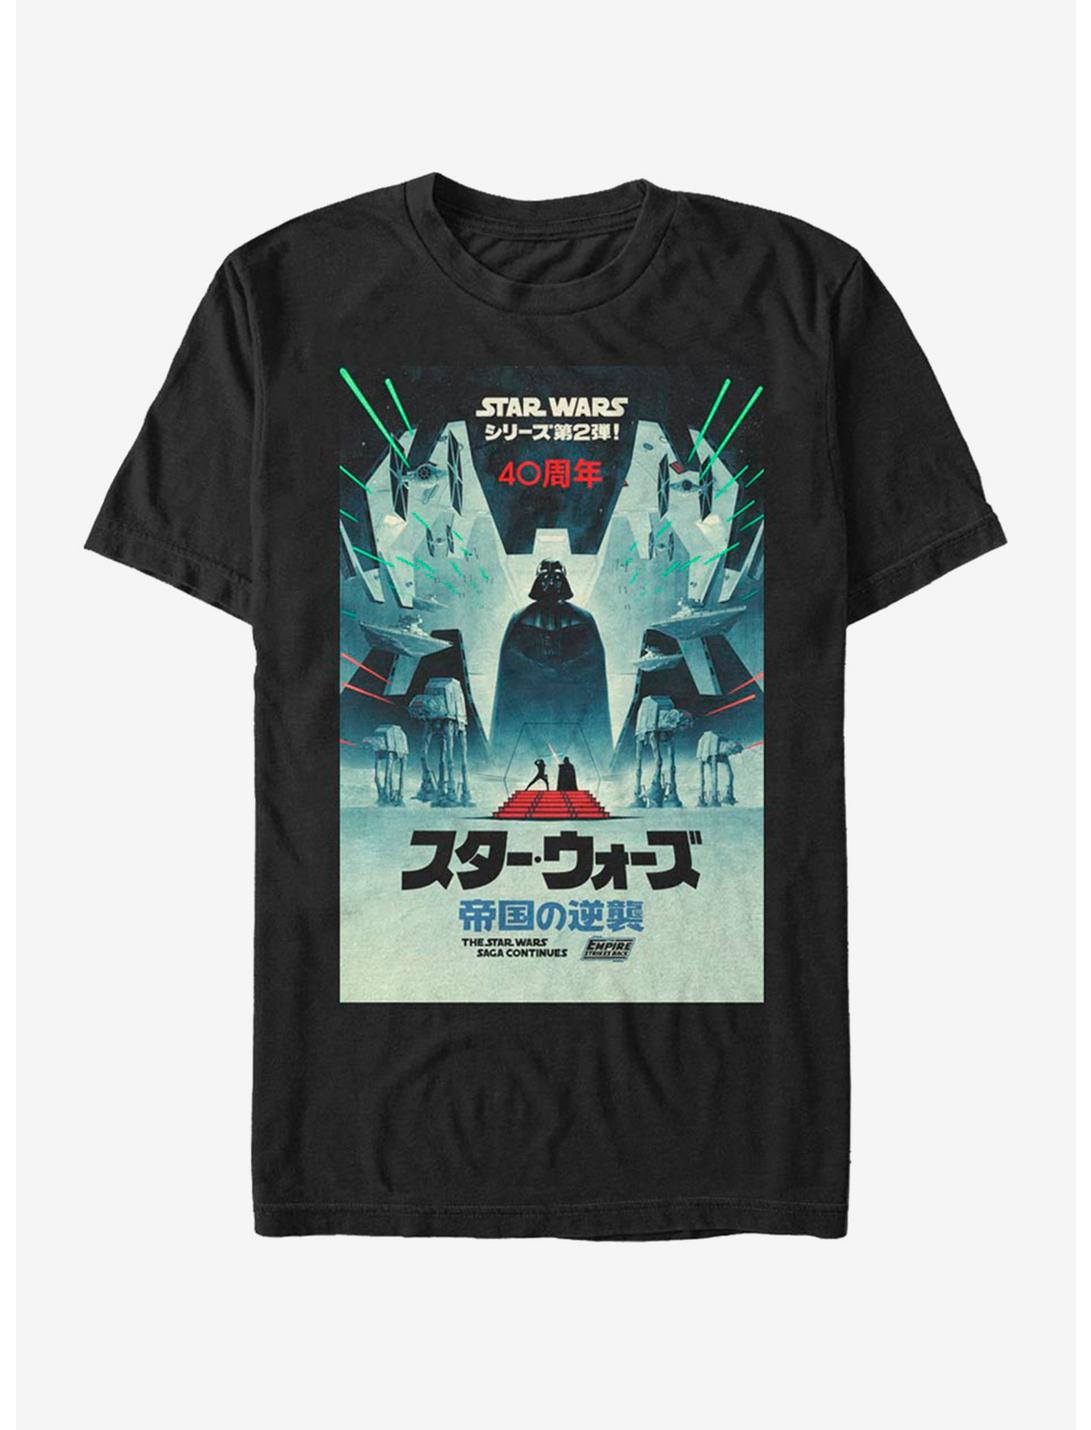 Star Wars Episode V: The Empire Strikes Back 40th Anniversary Japanese Poster T-Shirt, BLACK, hi-res